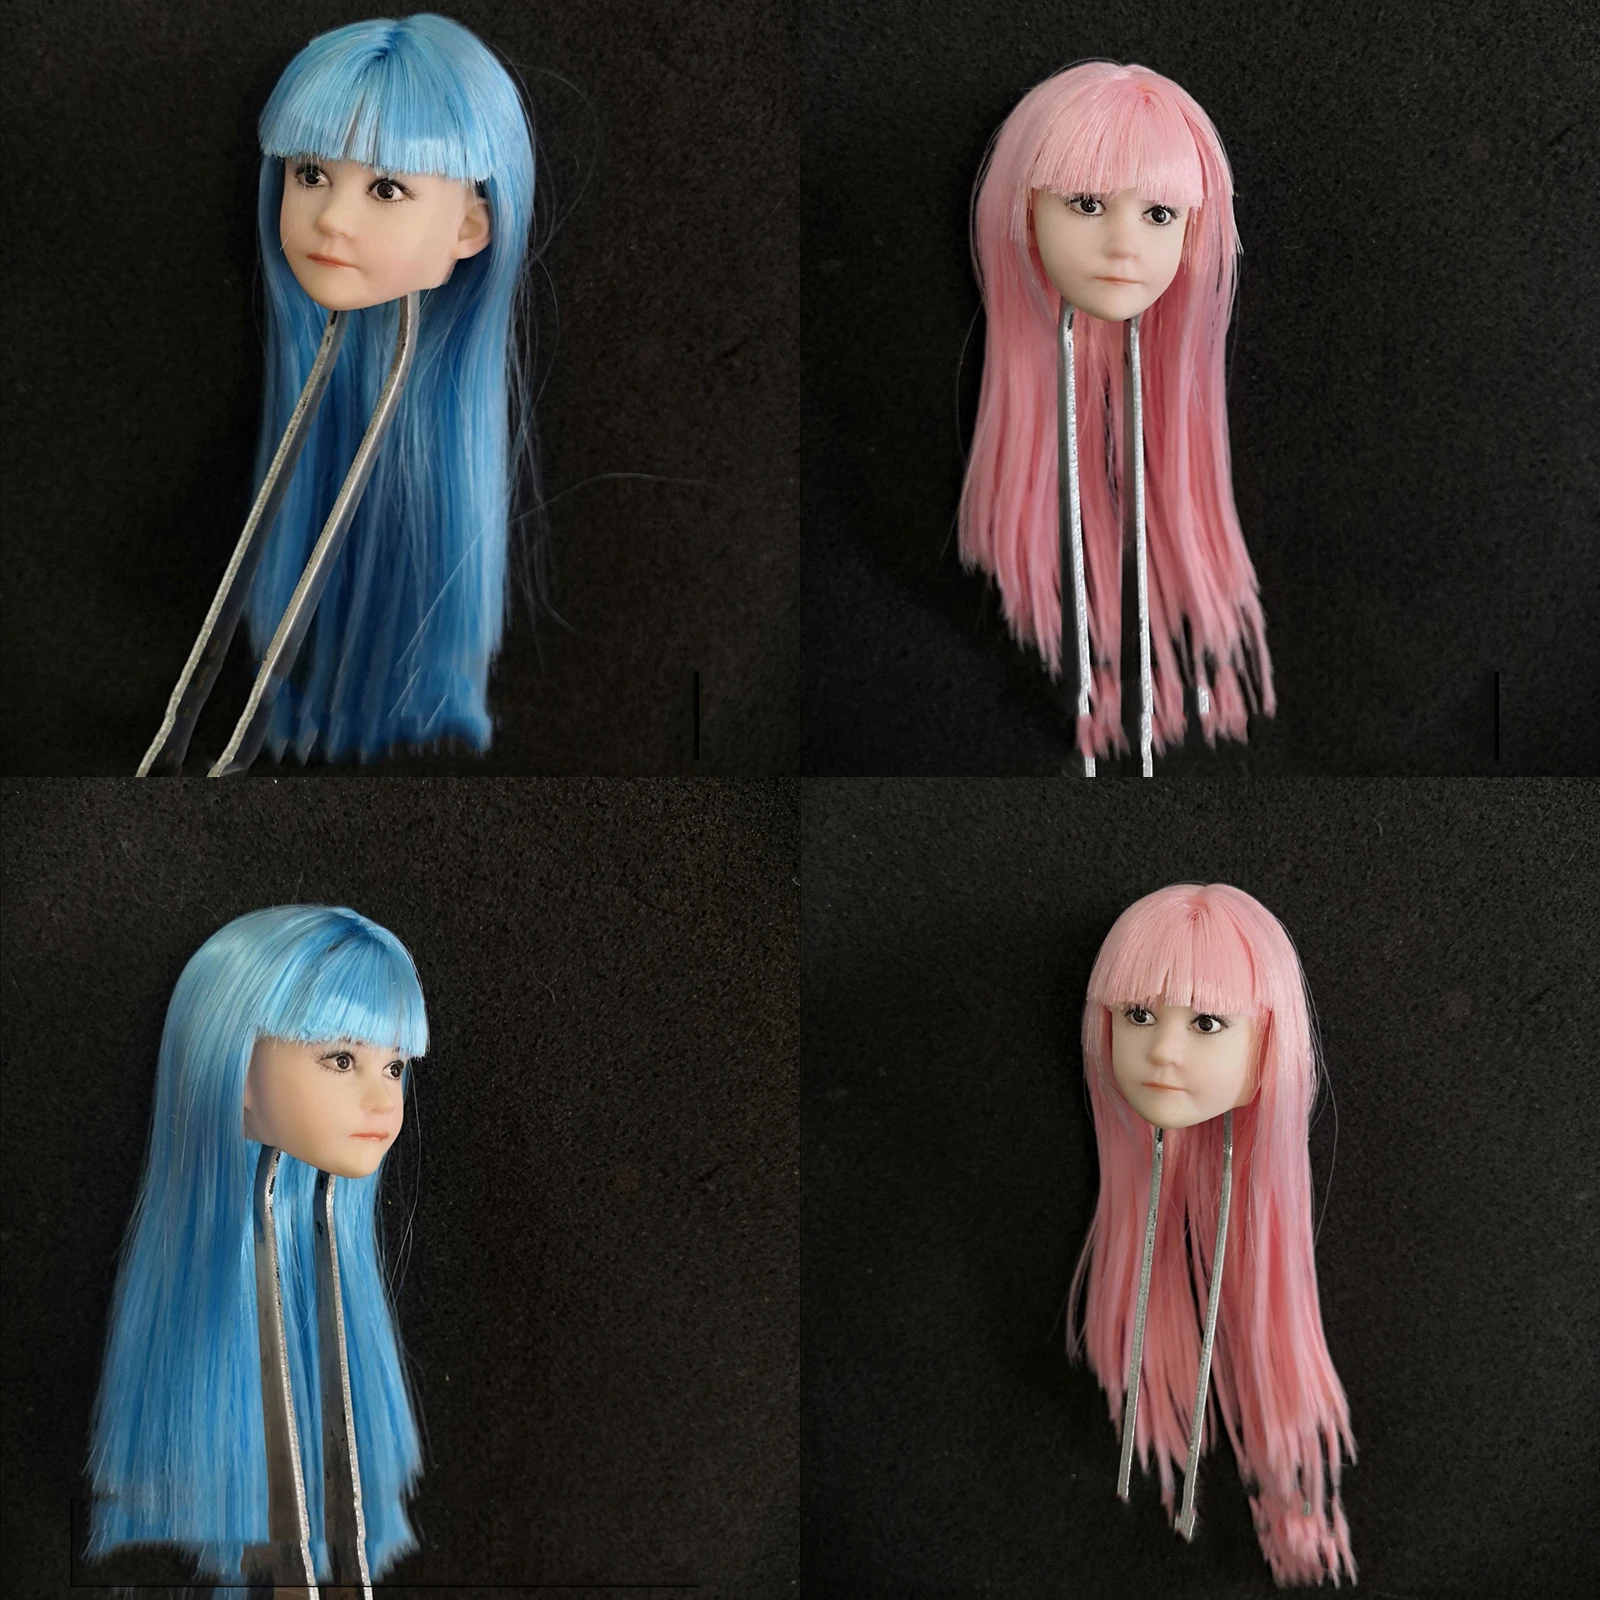 Blue 1:6 Scale Woman Hair Wig For 12/" Female Head Sculpting BJD Dolls